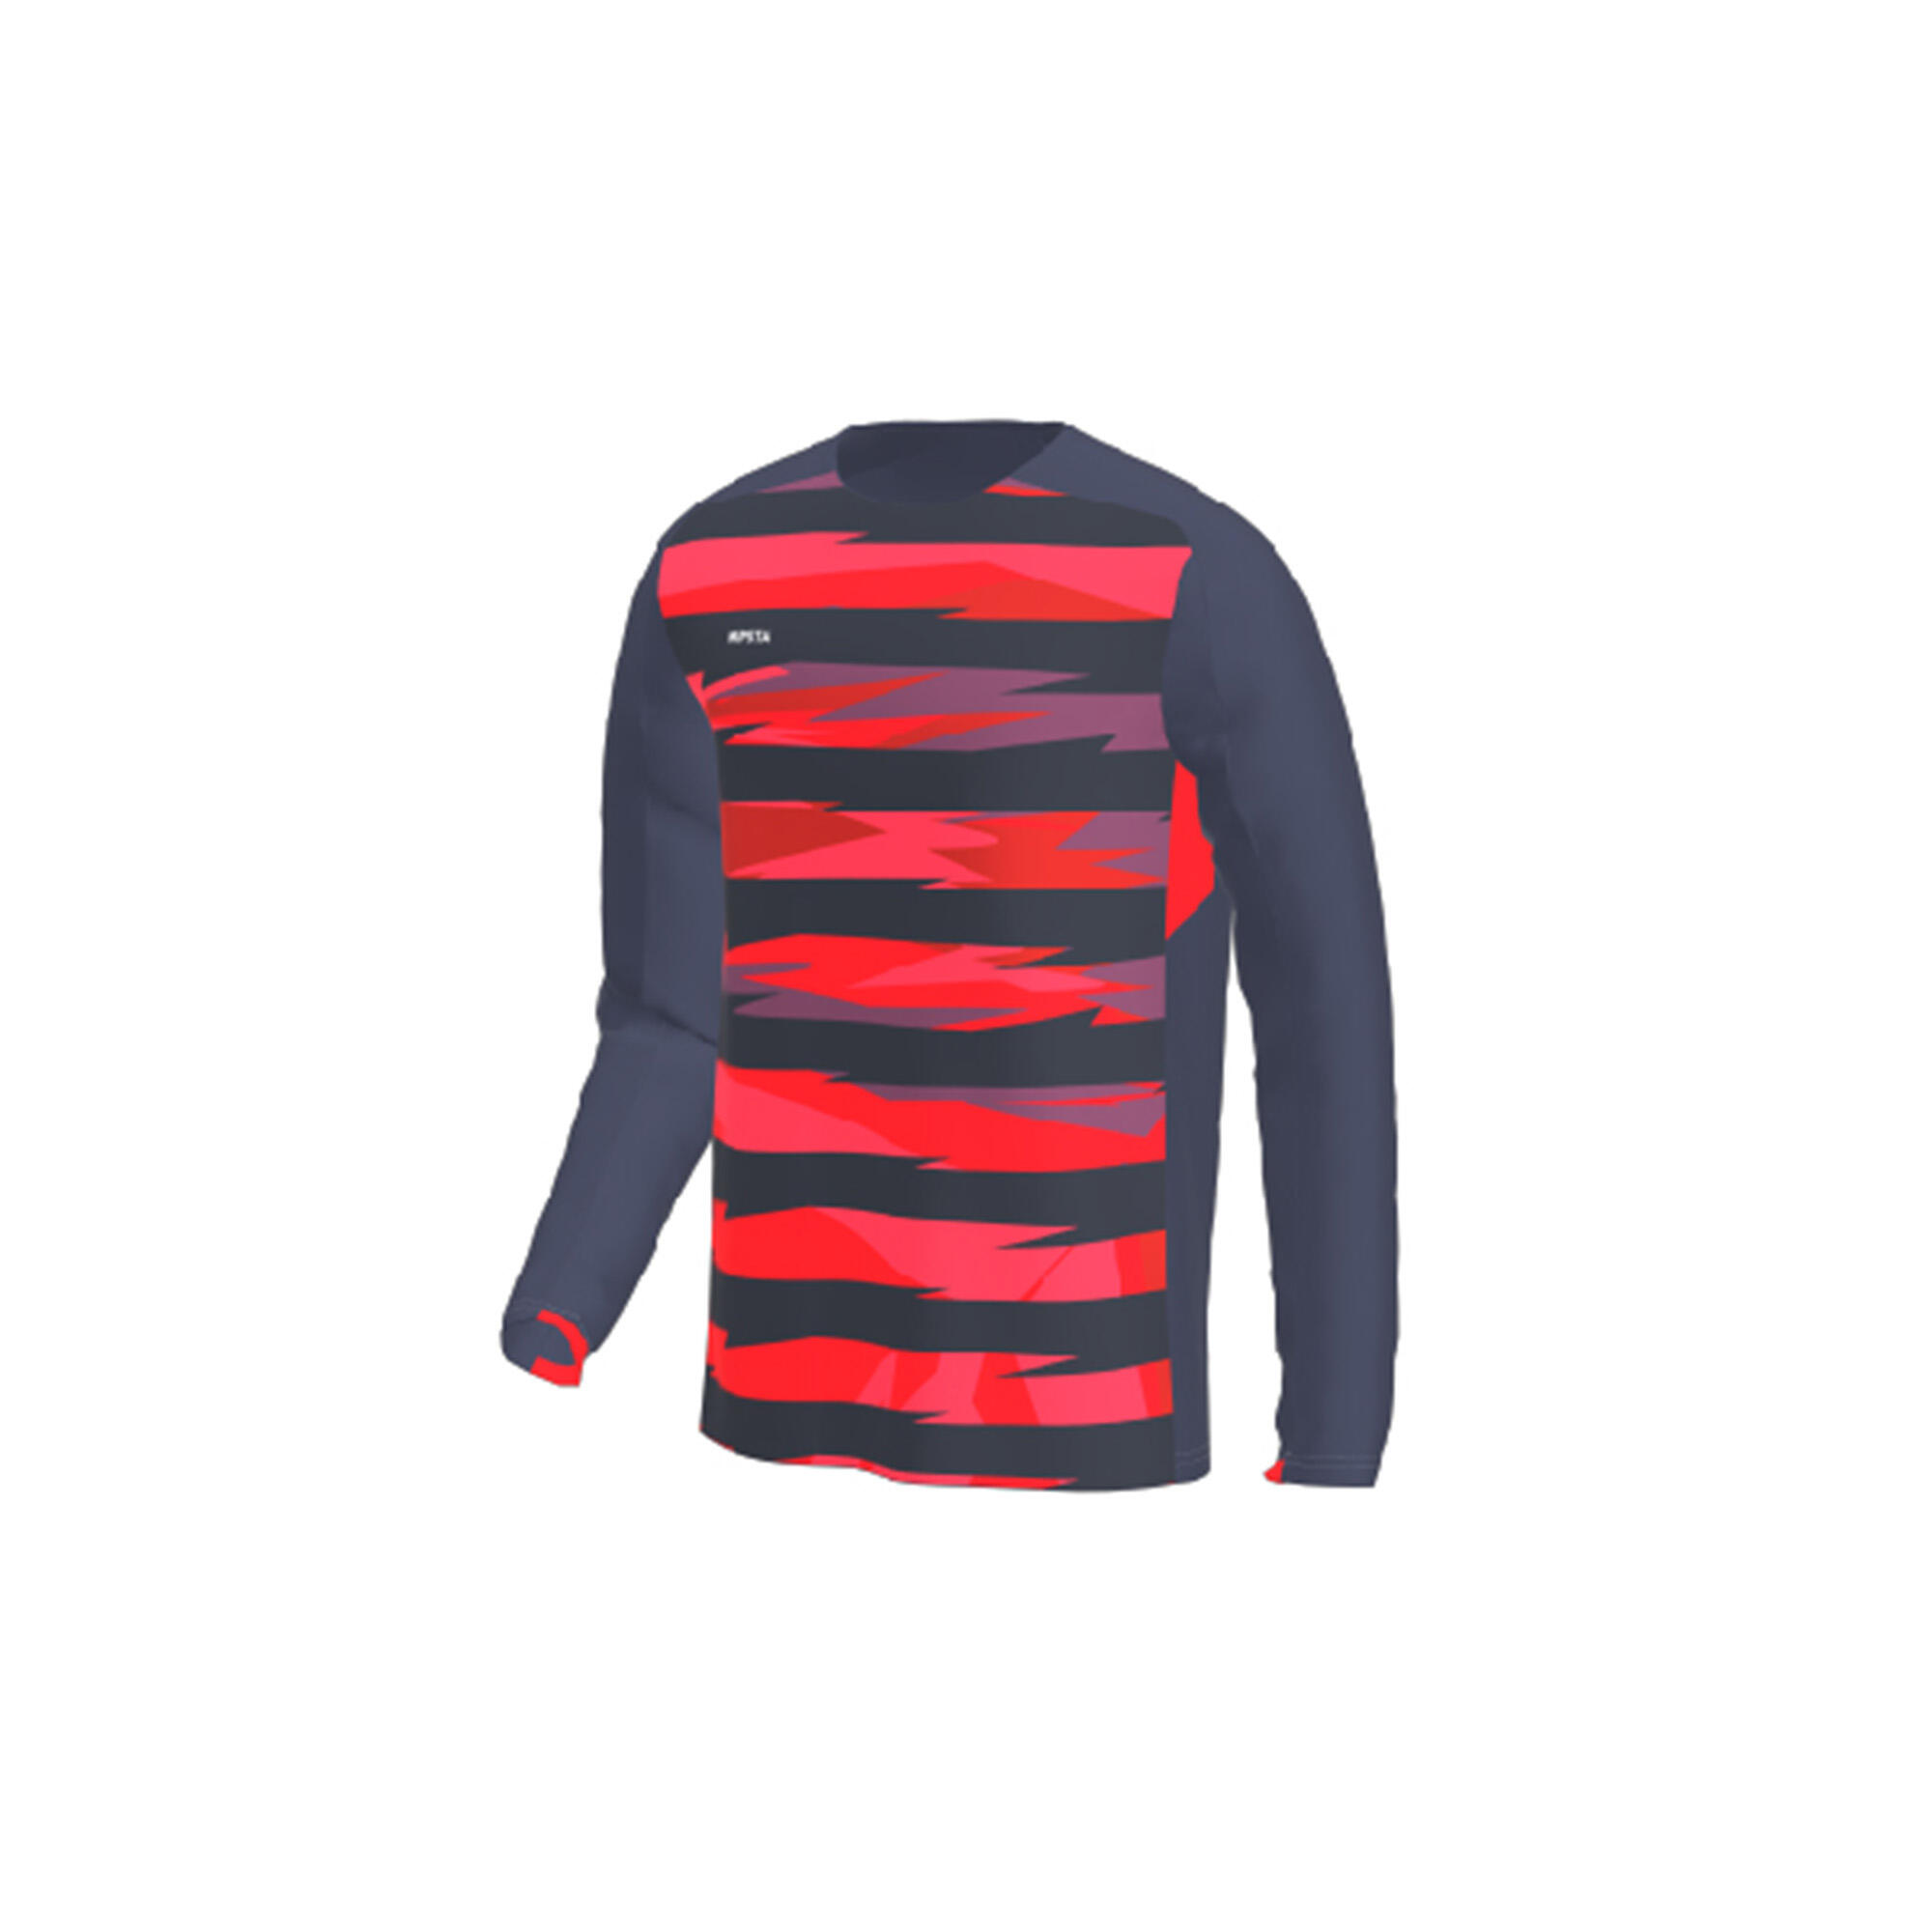 Kids' Long-Sleeved Shirt - Navy/Red KIPSTA